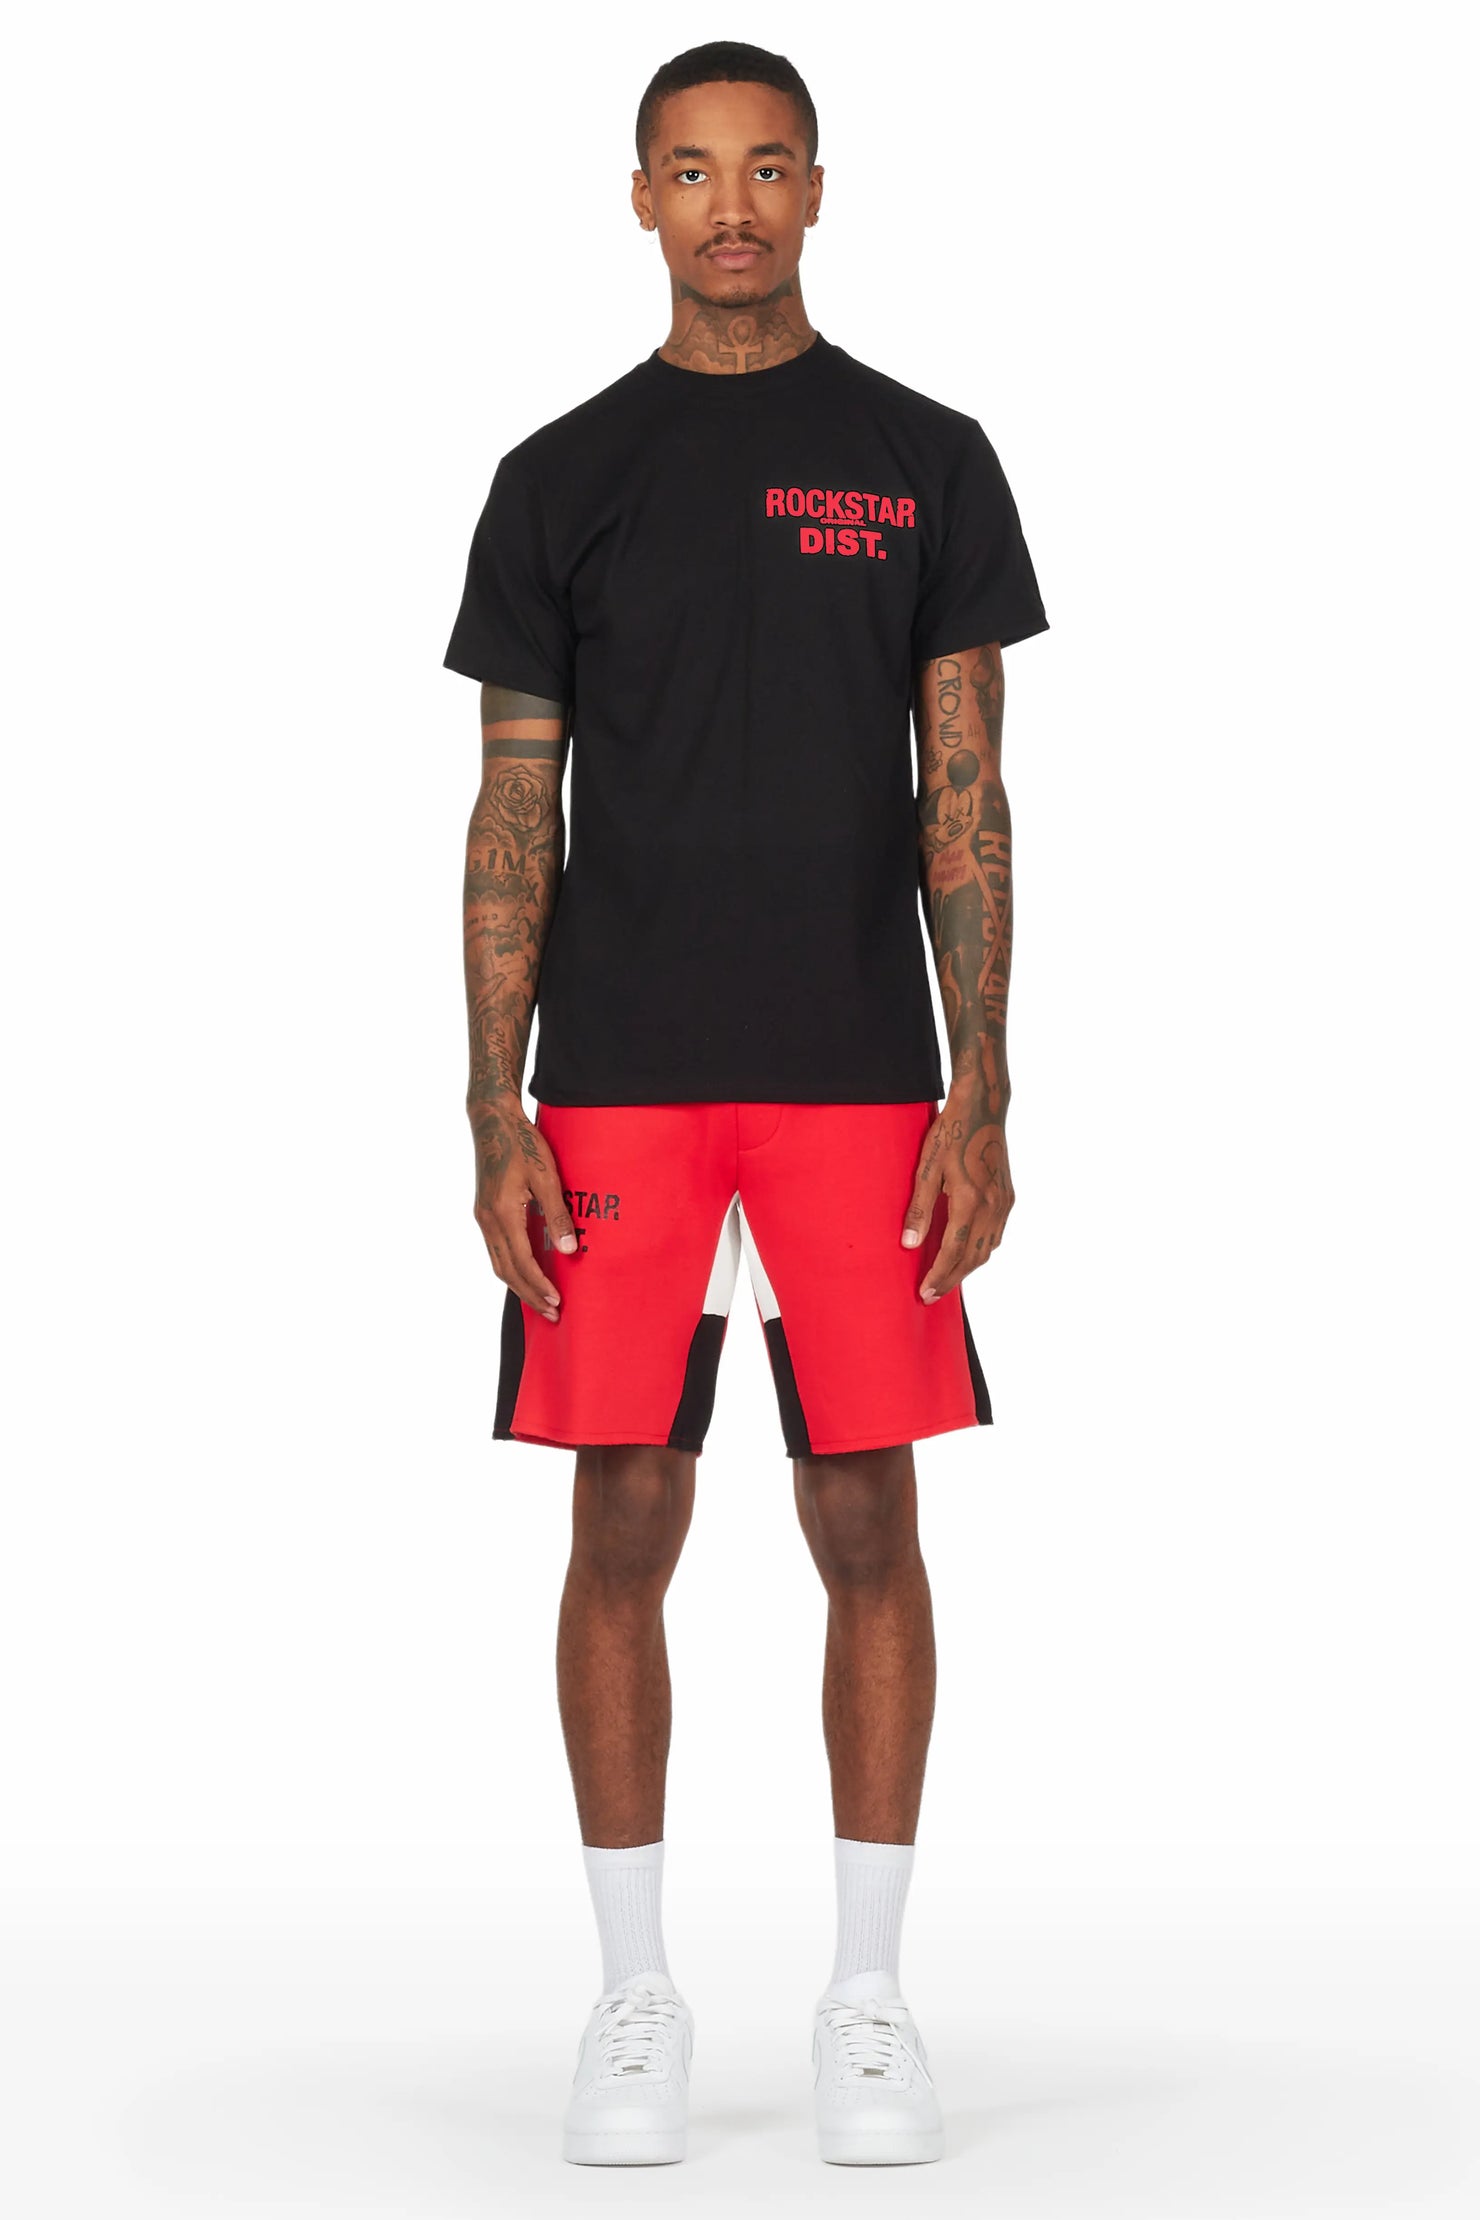 Buck 3.0 Black/Red T-Shirt Short Set